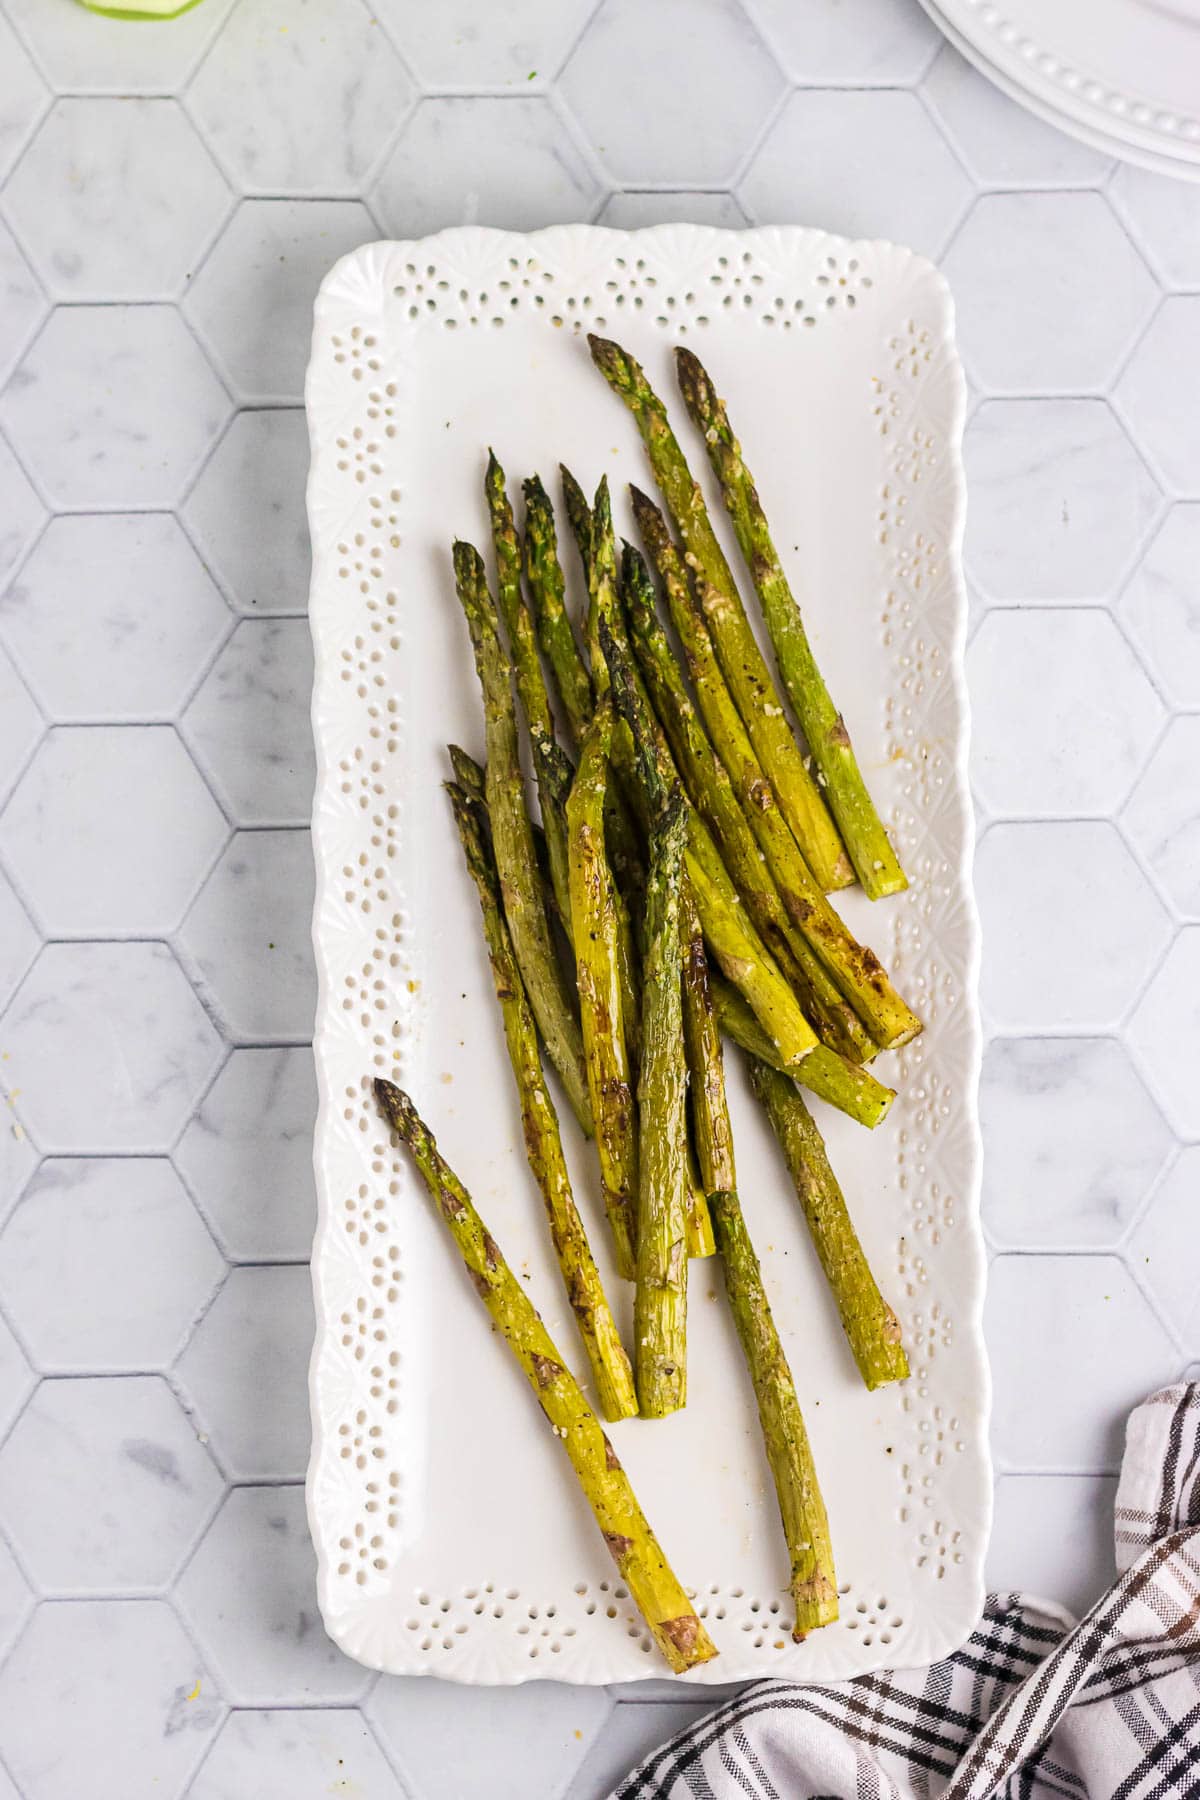 Roasted asparagus on a decorative serving platter.